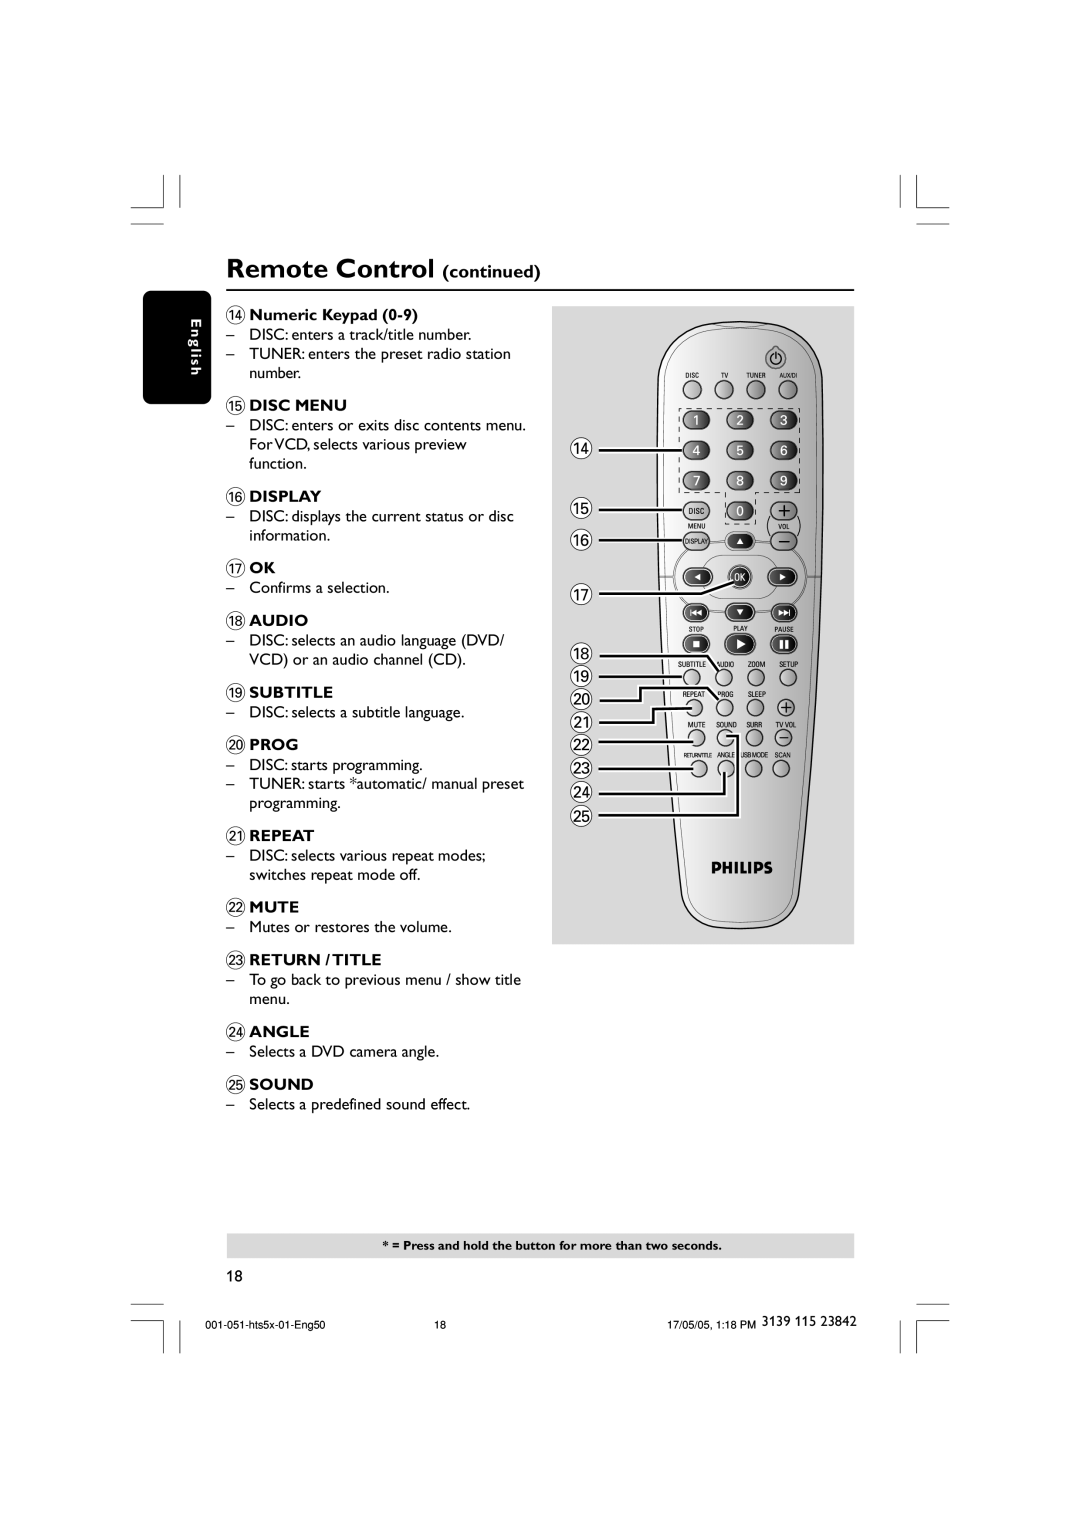 Philips HTS5000W Remote Control continued, $ %, £ ≤ ∞, $Numeric Keypad, Disc Menu, Display, Audio, Subtitle, Prog, ¡Repeat 